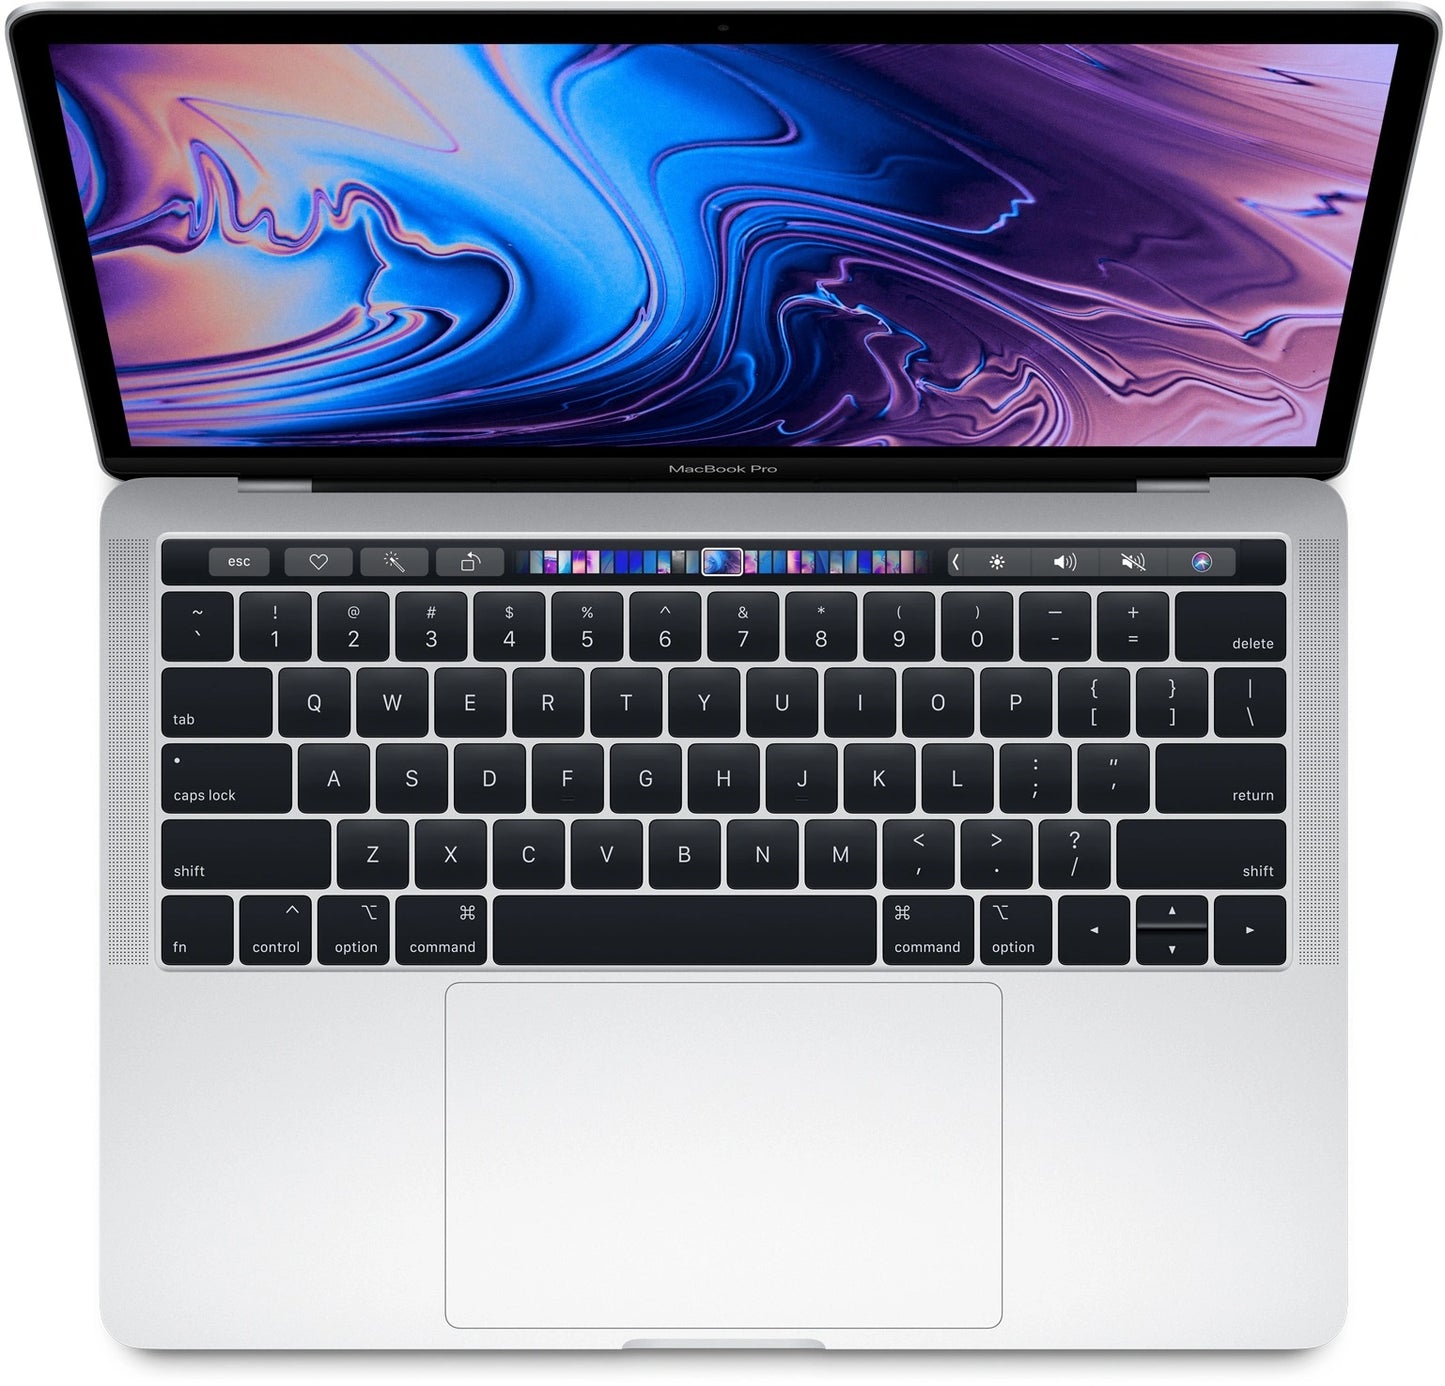 MacBook Pro 13-inch Touchbar i5 2.4 Ghz 16GB 256GB Zilver - test-product-media-liquid1